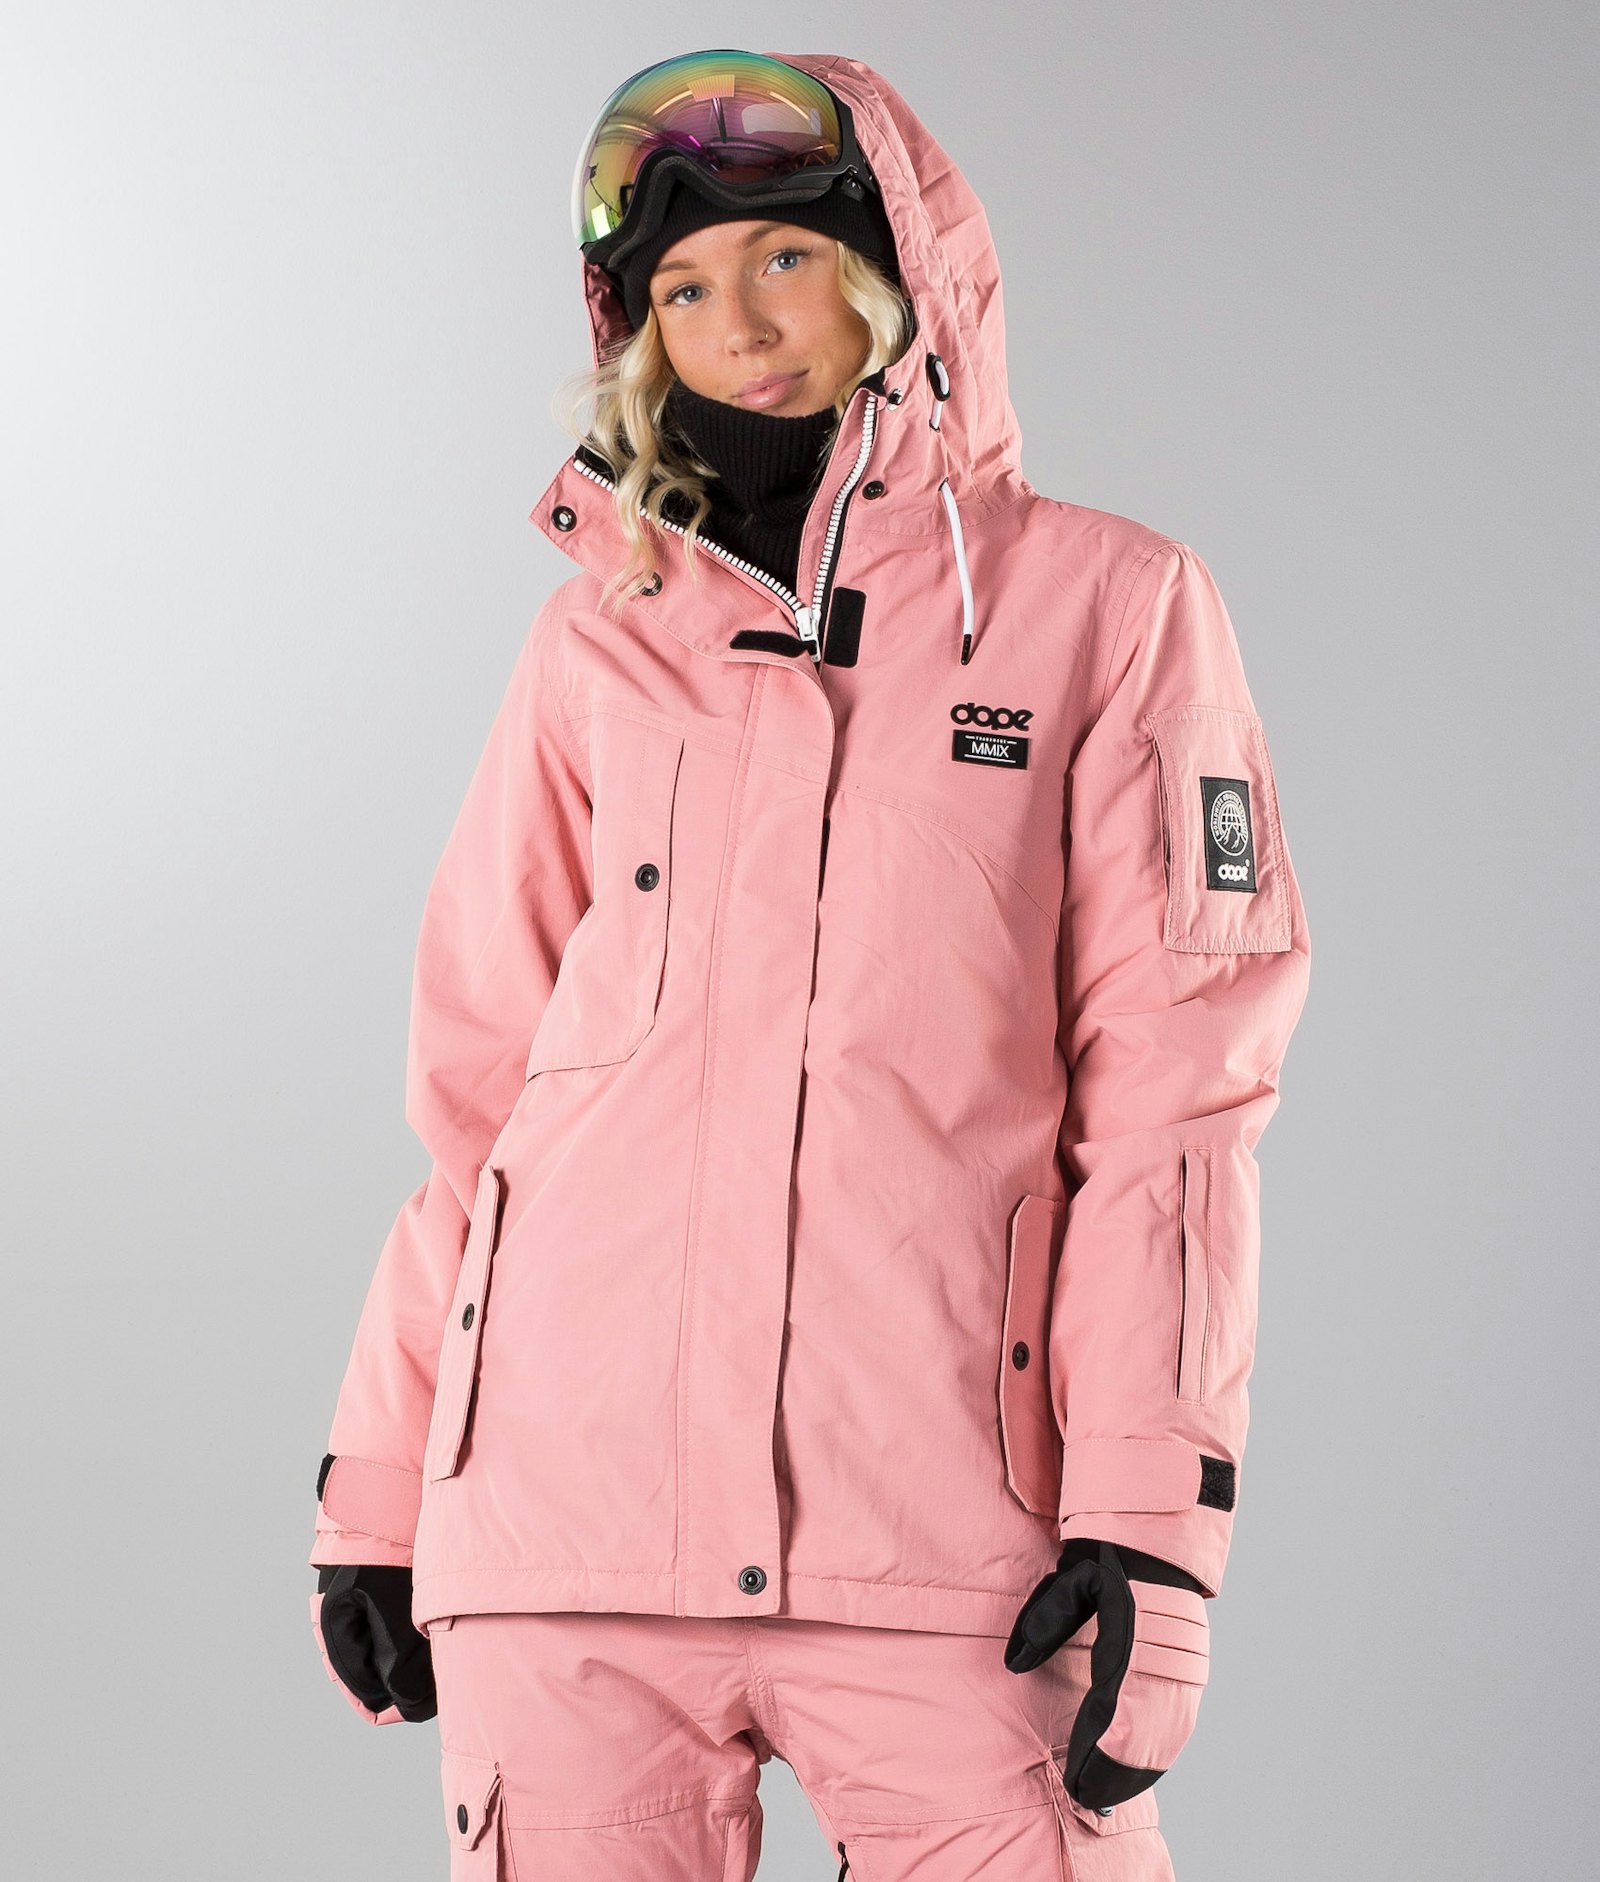 Adept W 2018 Snowboard Jacket Women Pink, Image 1 of 12